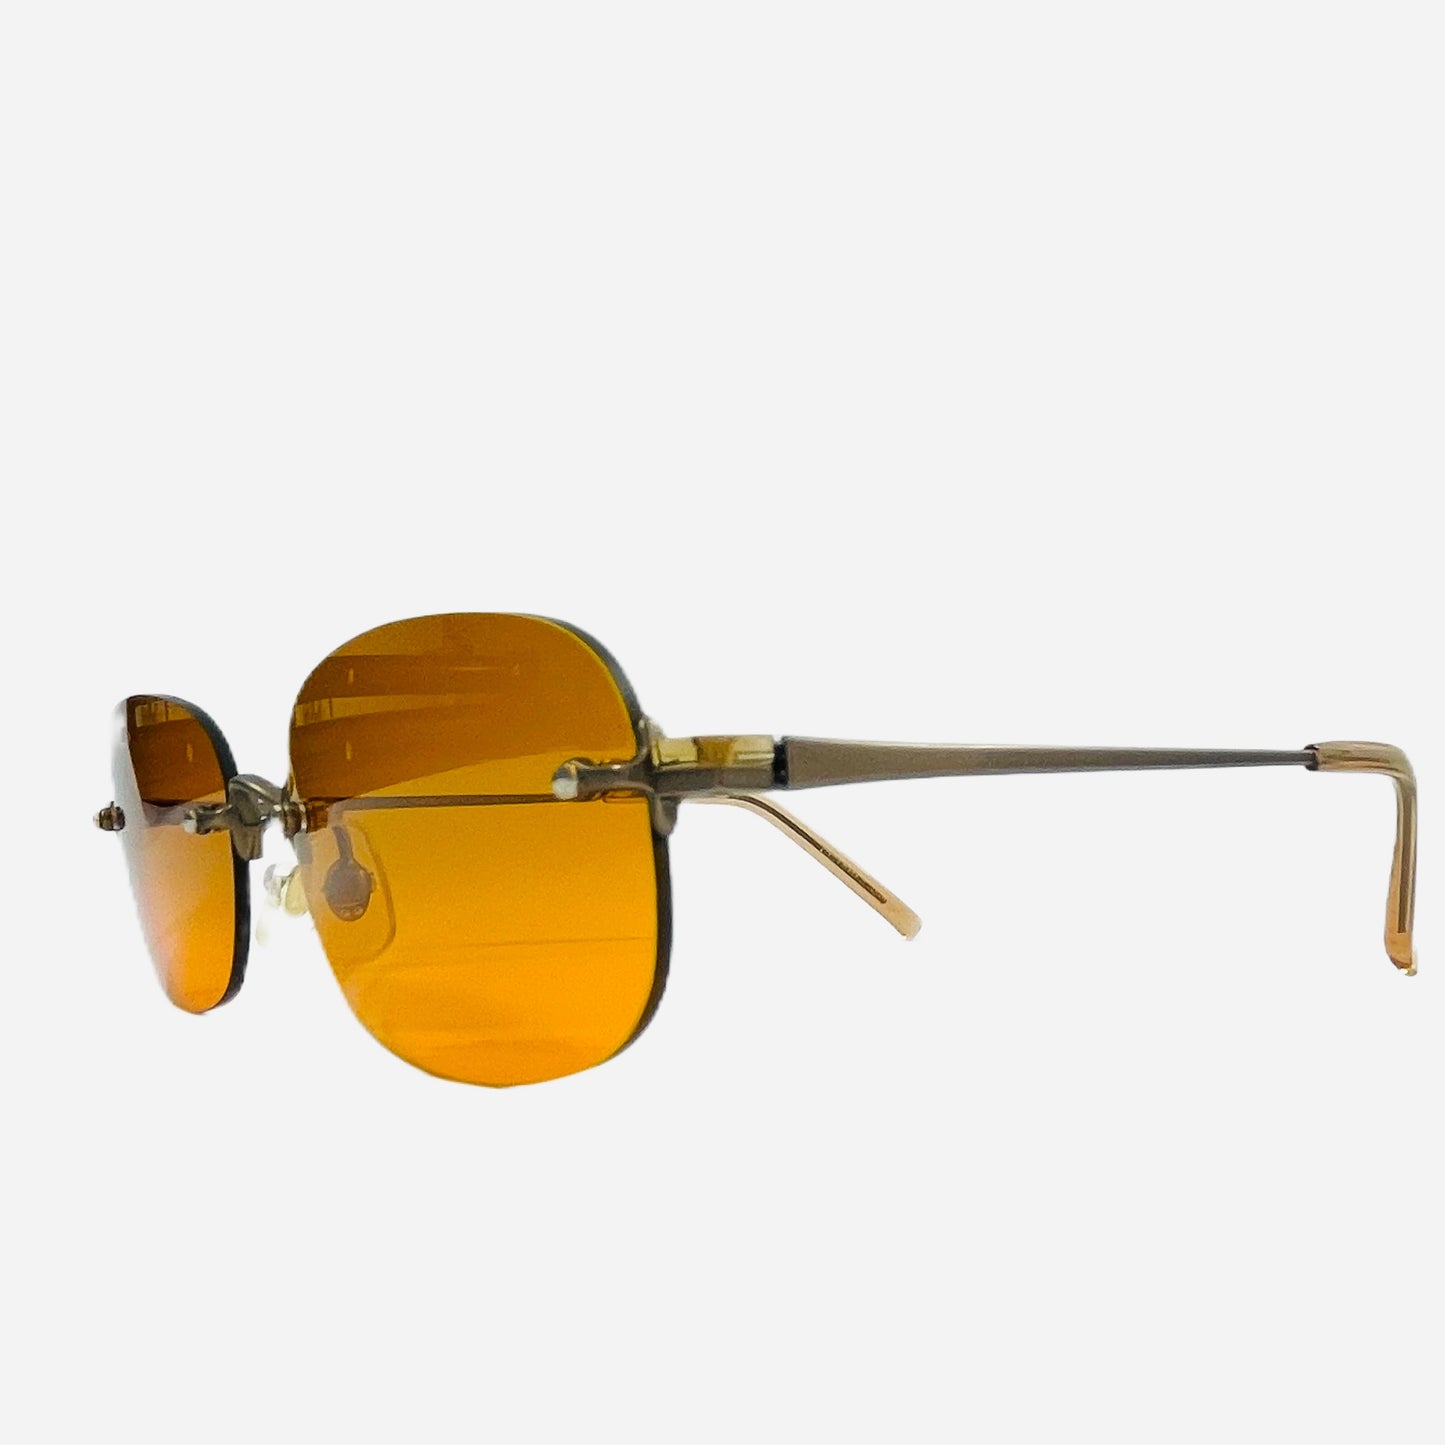 Vintage-Matsuda-Sonnenbrille-Sunglasses-rimless-rahmenlos-Custom-the-seekers-front-seite-2